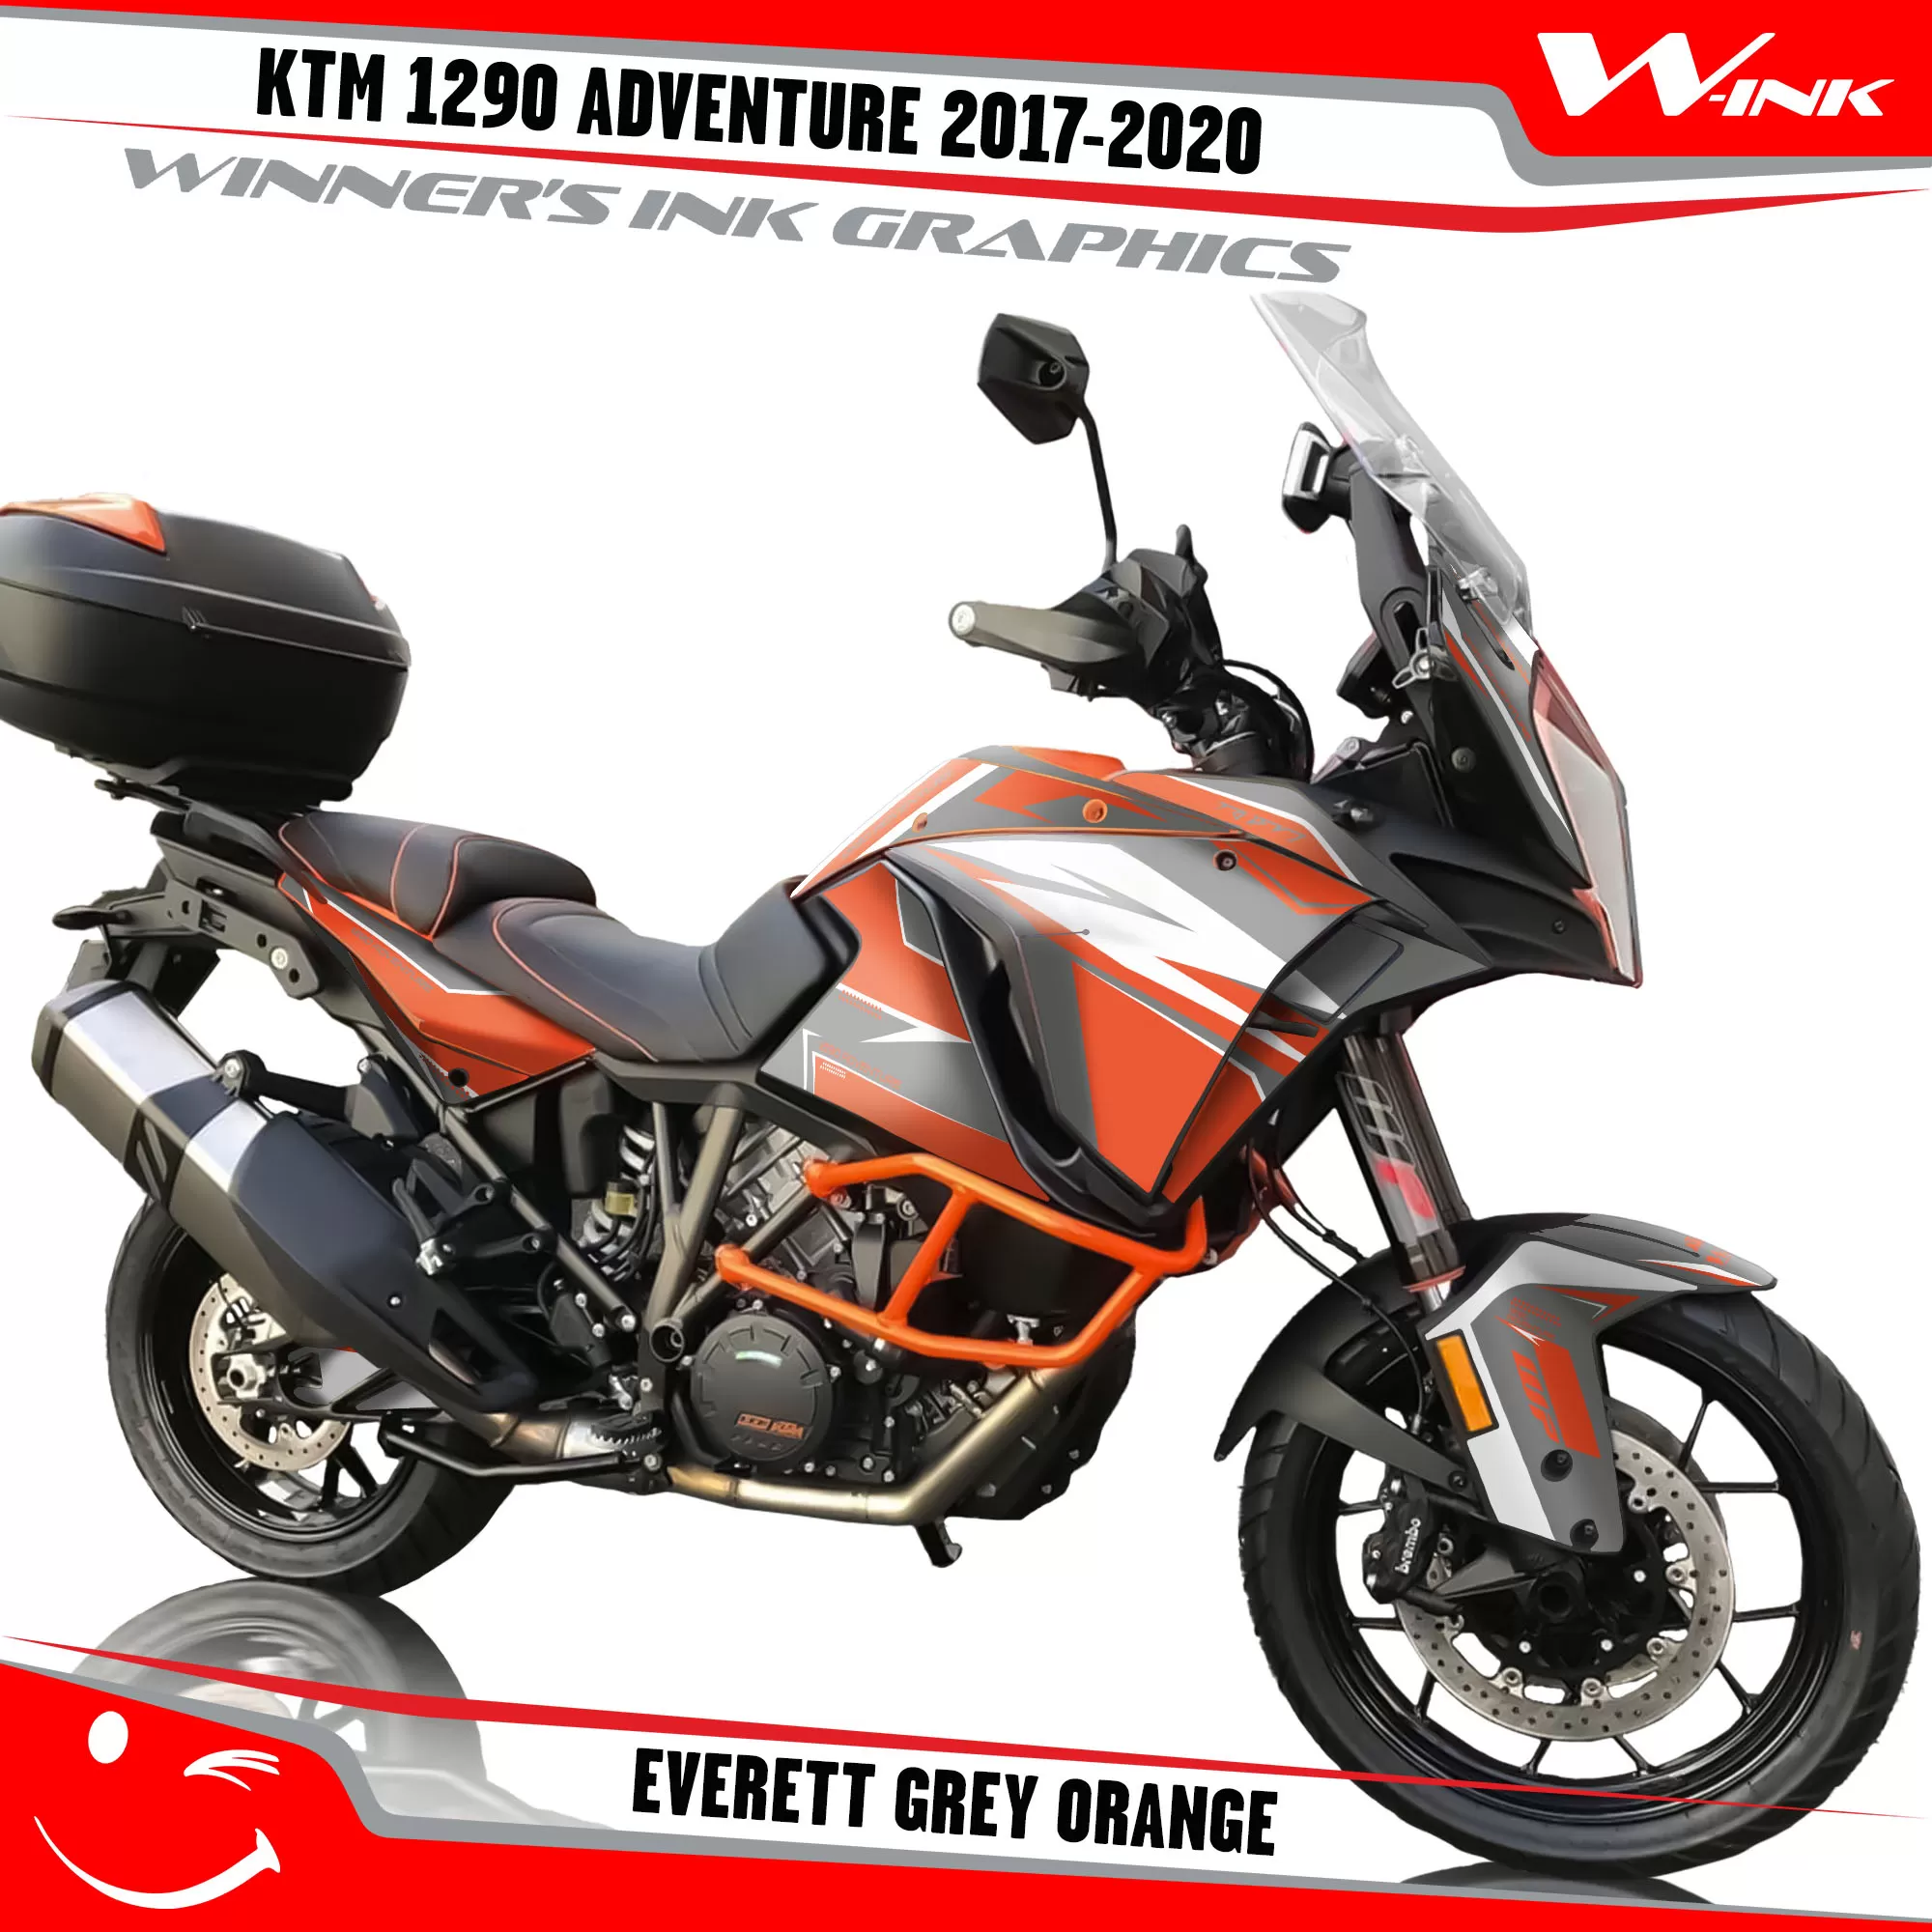 KTM-Adventure-1290-2017-2018-2019-2020-graphics-kit-and-decals-Everett-Grey-Orange